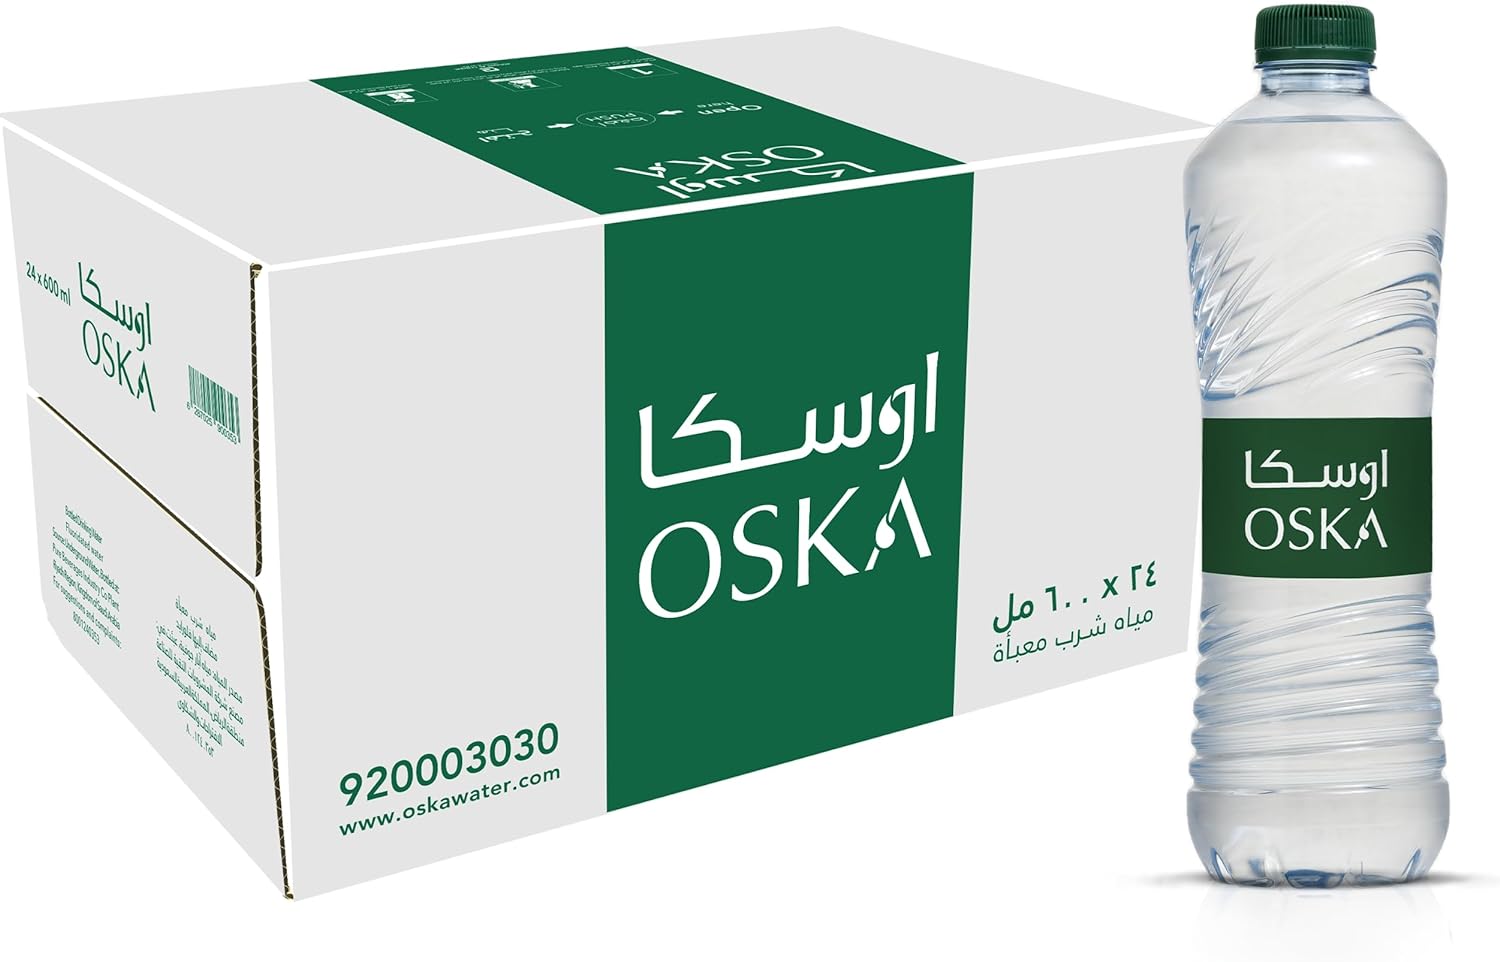 Oska Drinking Water, 330 ml - Pack of 40